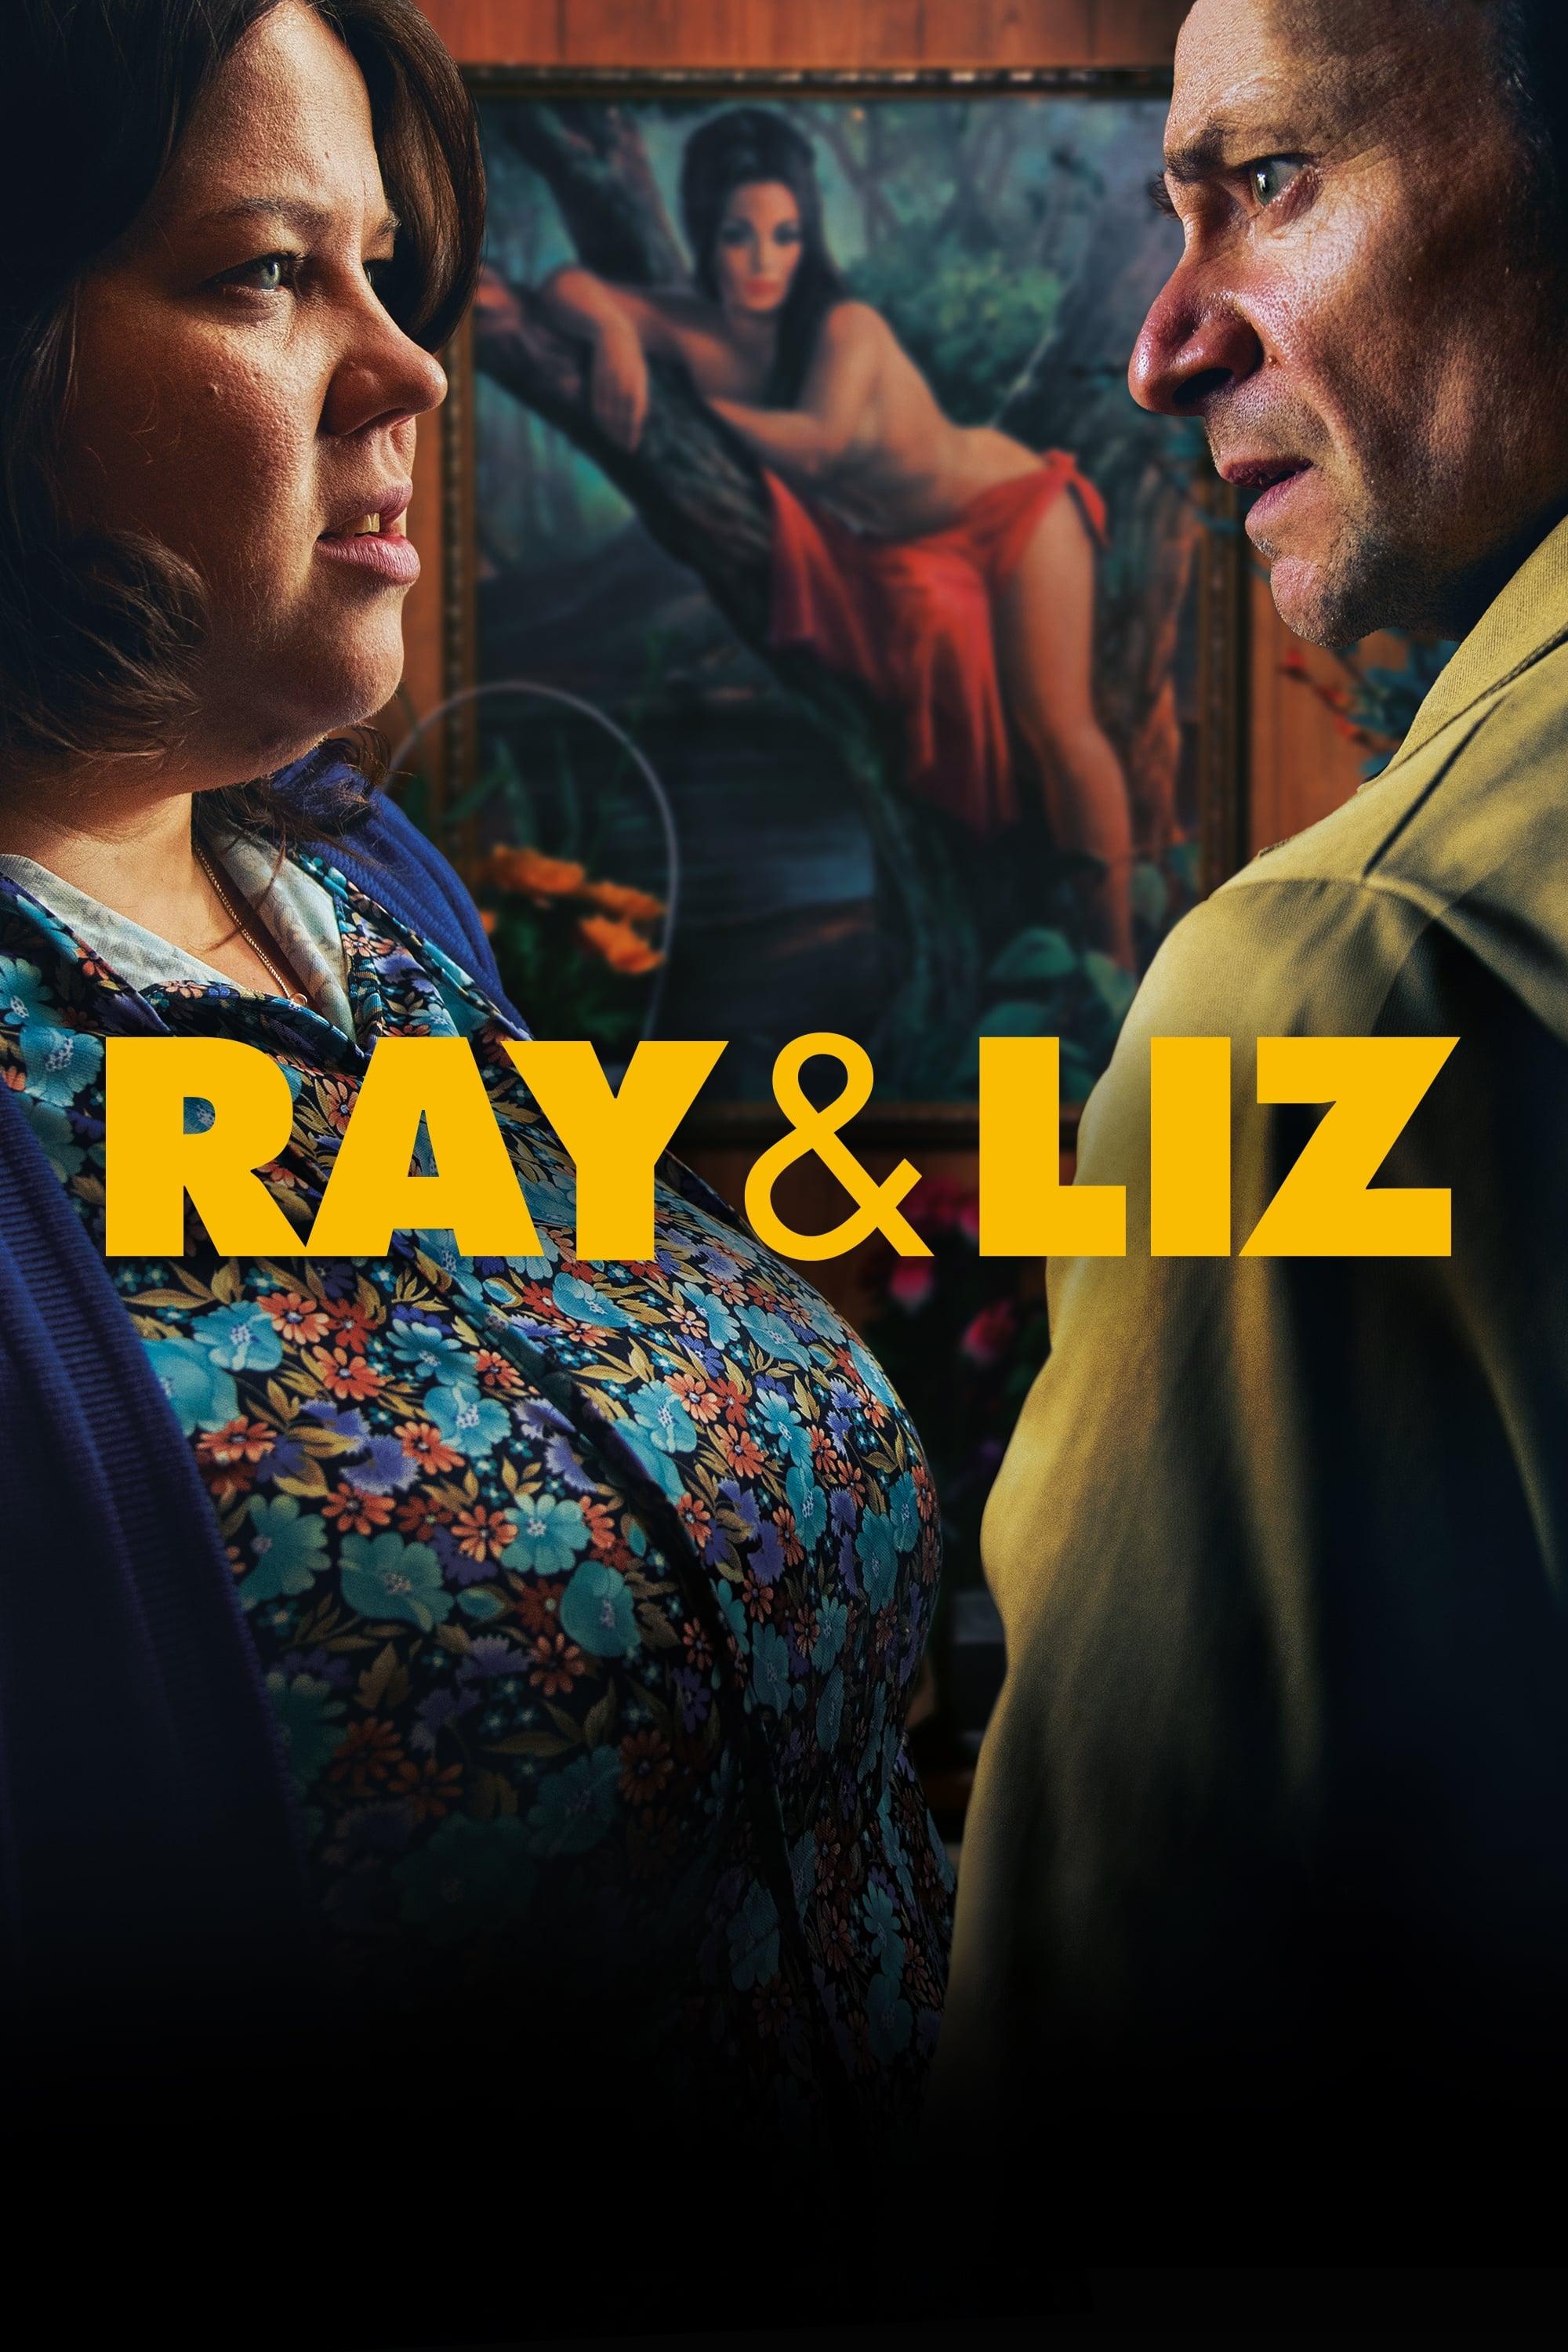 Ray & Liz poster